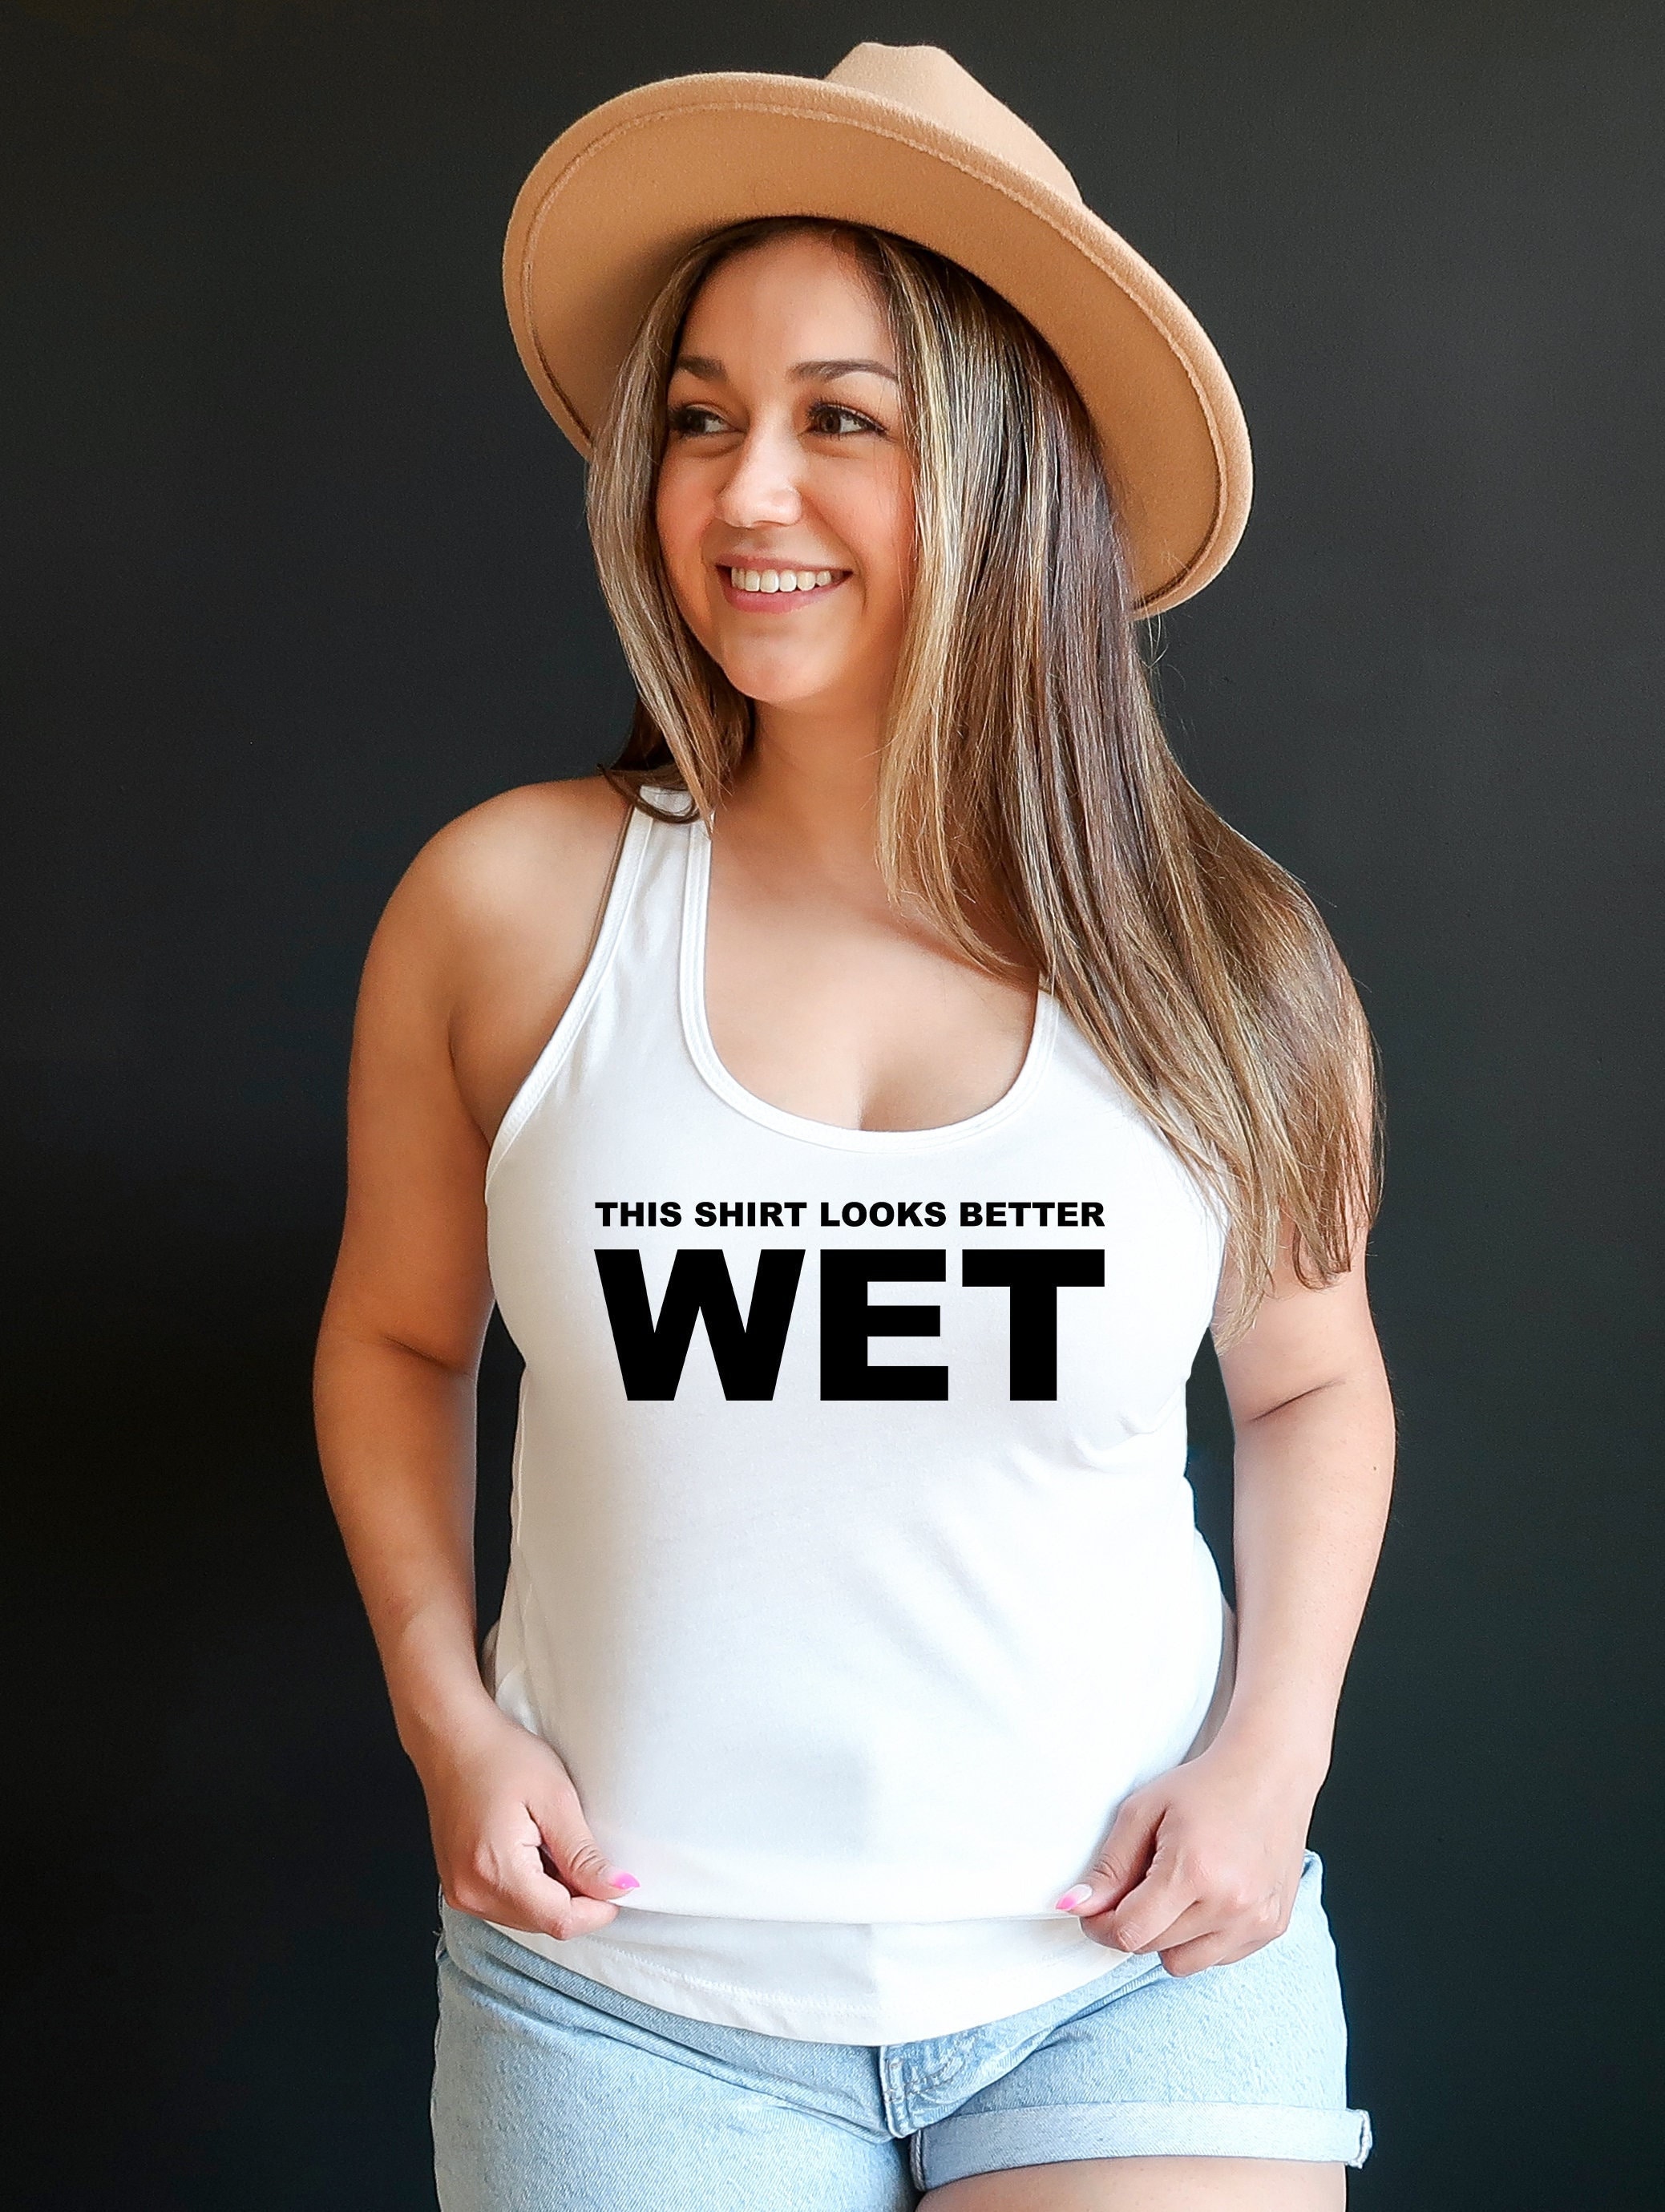 darwin payne share wet t shirts tits photos